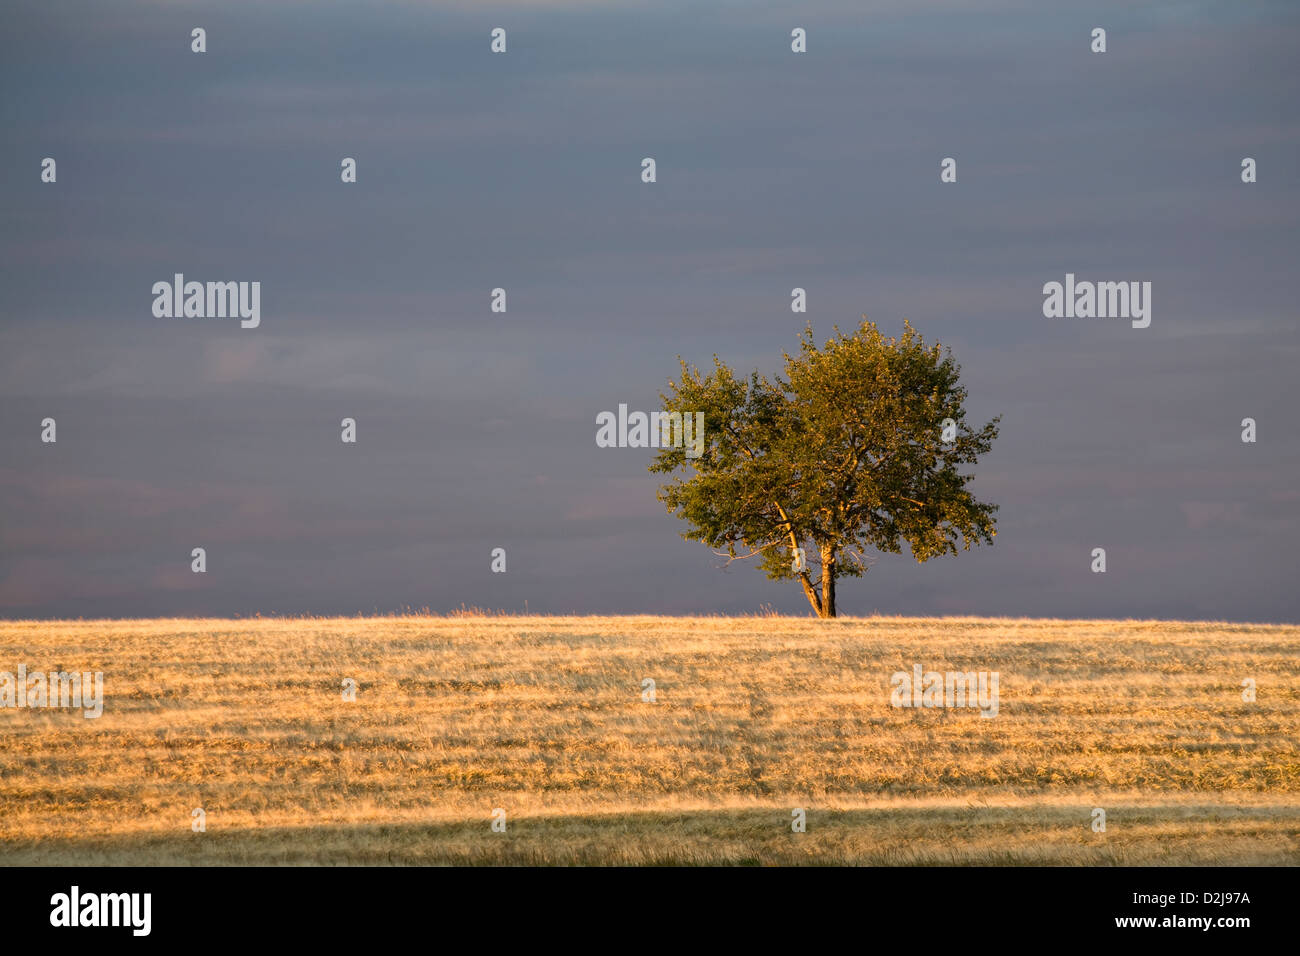 A single tree in a golden field at sunrise; alberta canada Stock Photo